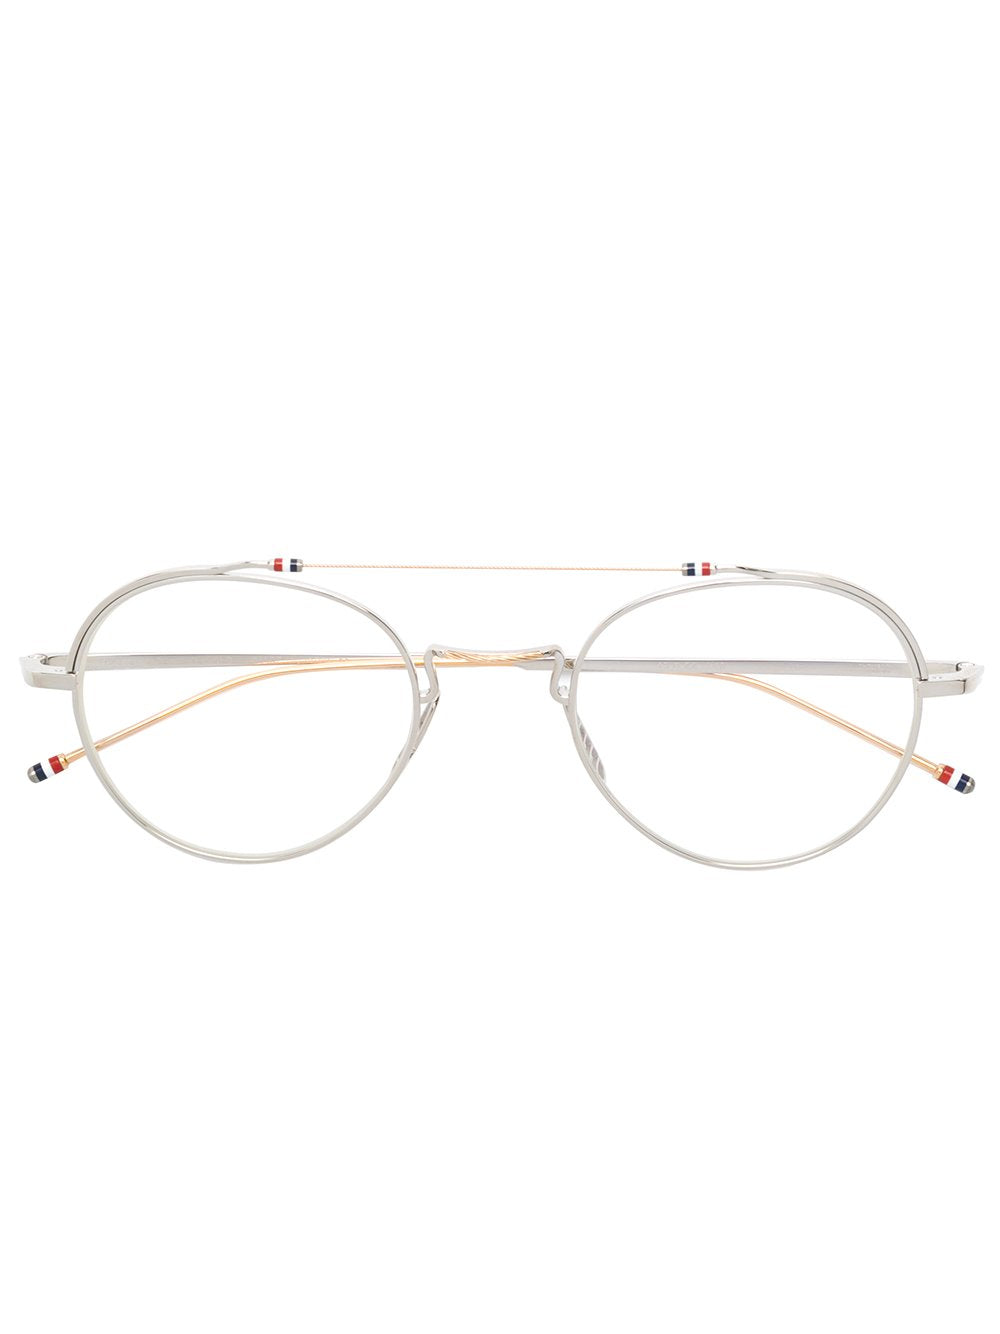 THOM BROWNE UNISEX Metal Glasses & Frames 